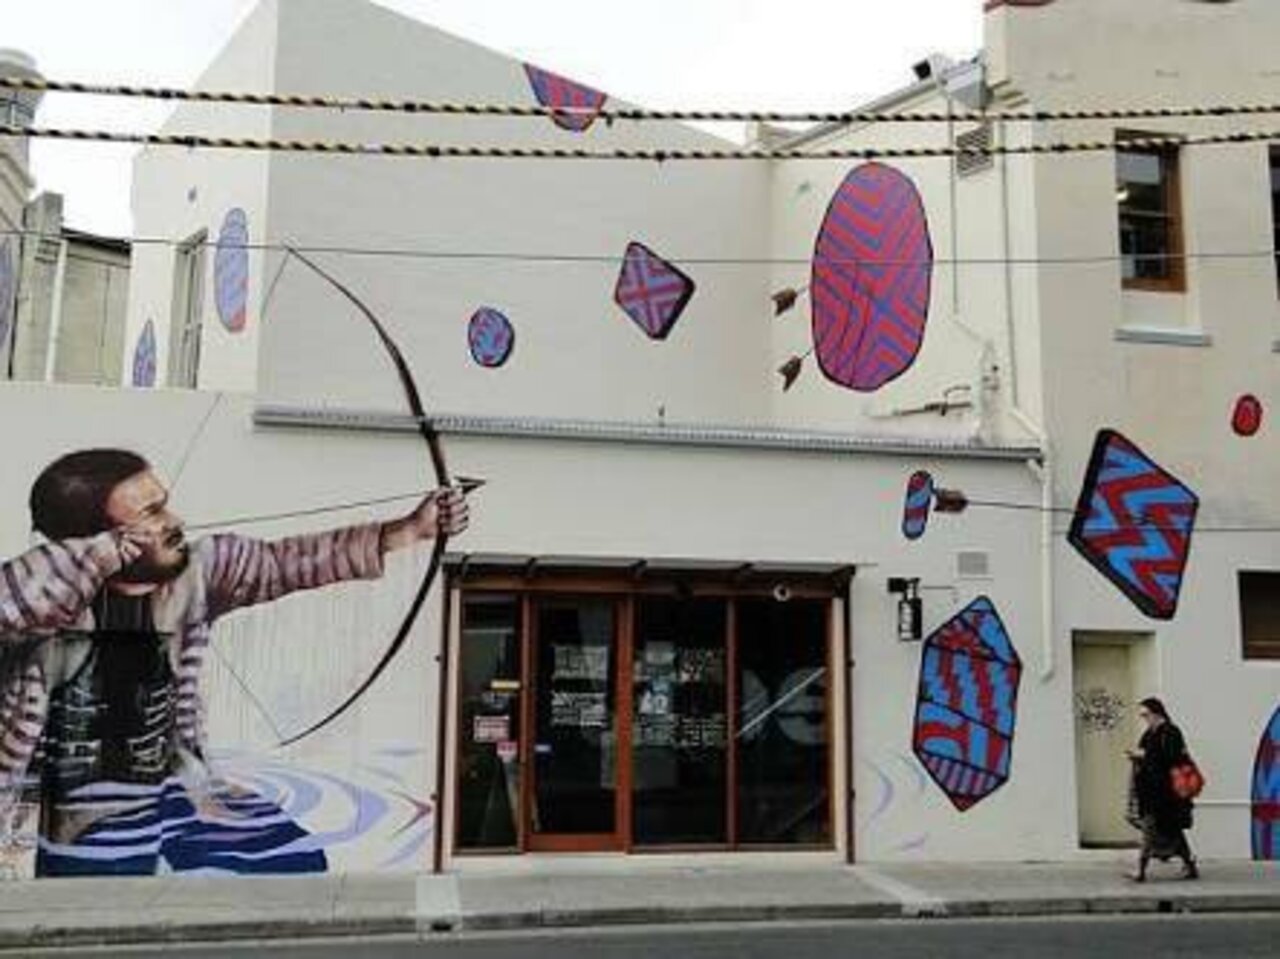 Mural by Fintan Magee, Sydney, Australia #Streetart #urbanart #graffiti #mural #art #Sydney #Australia https://t.co/vJetvlQiAE